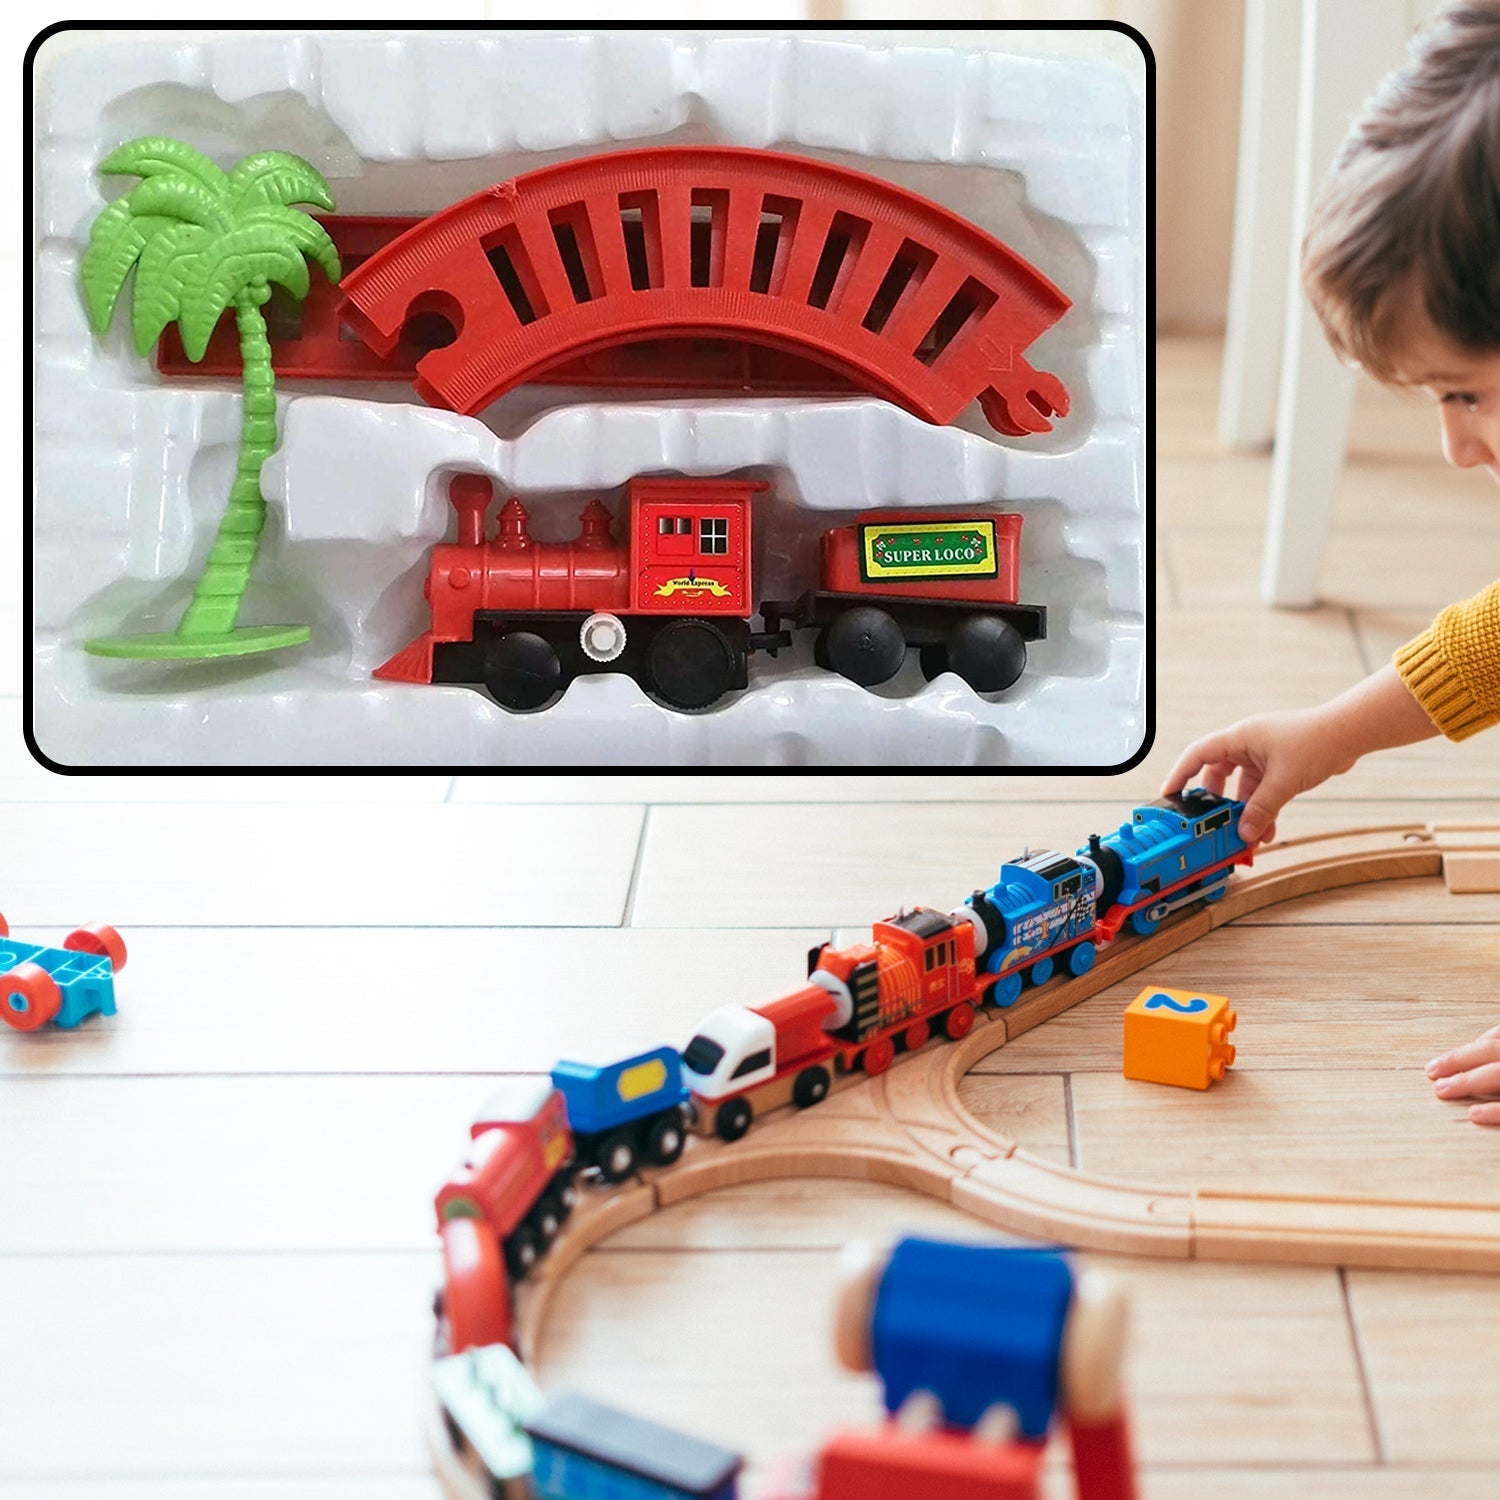 4470 World Express Mini Train Play Set for kids DeoDap